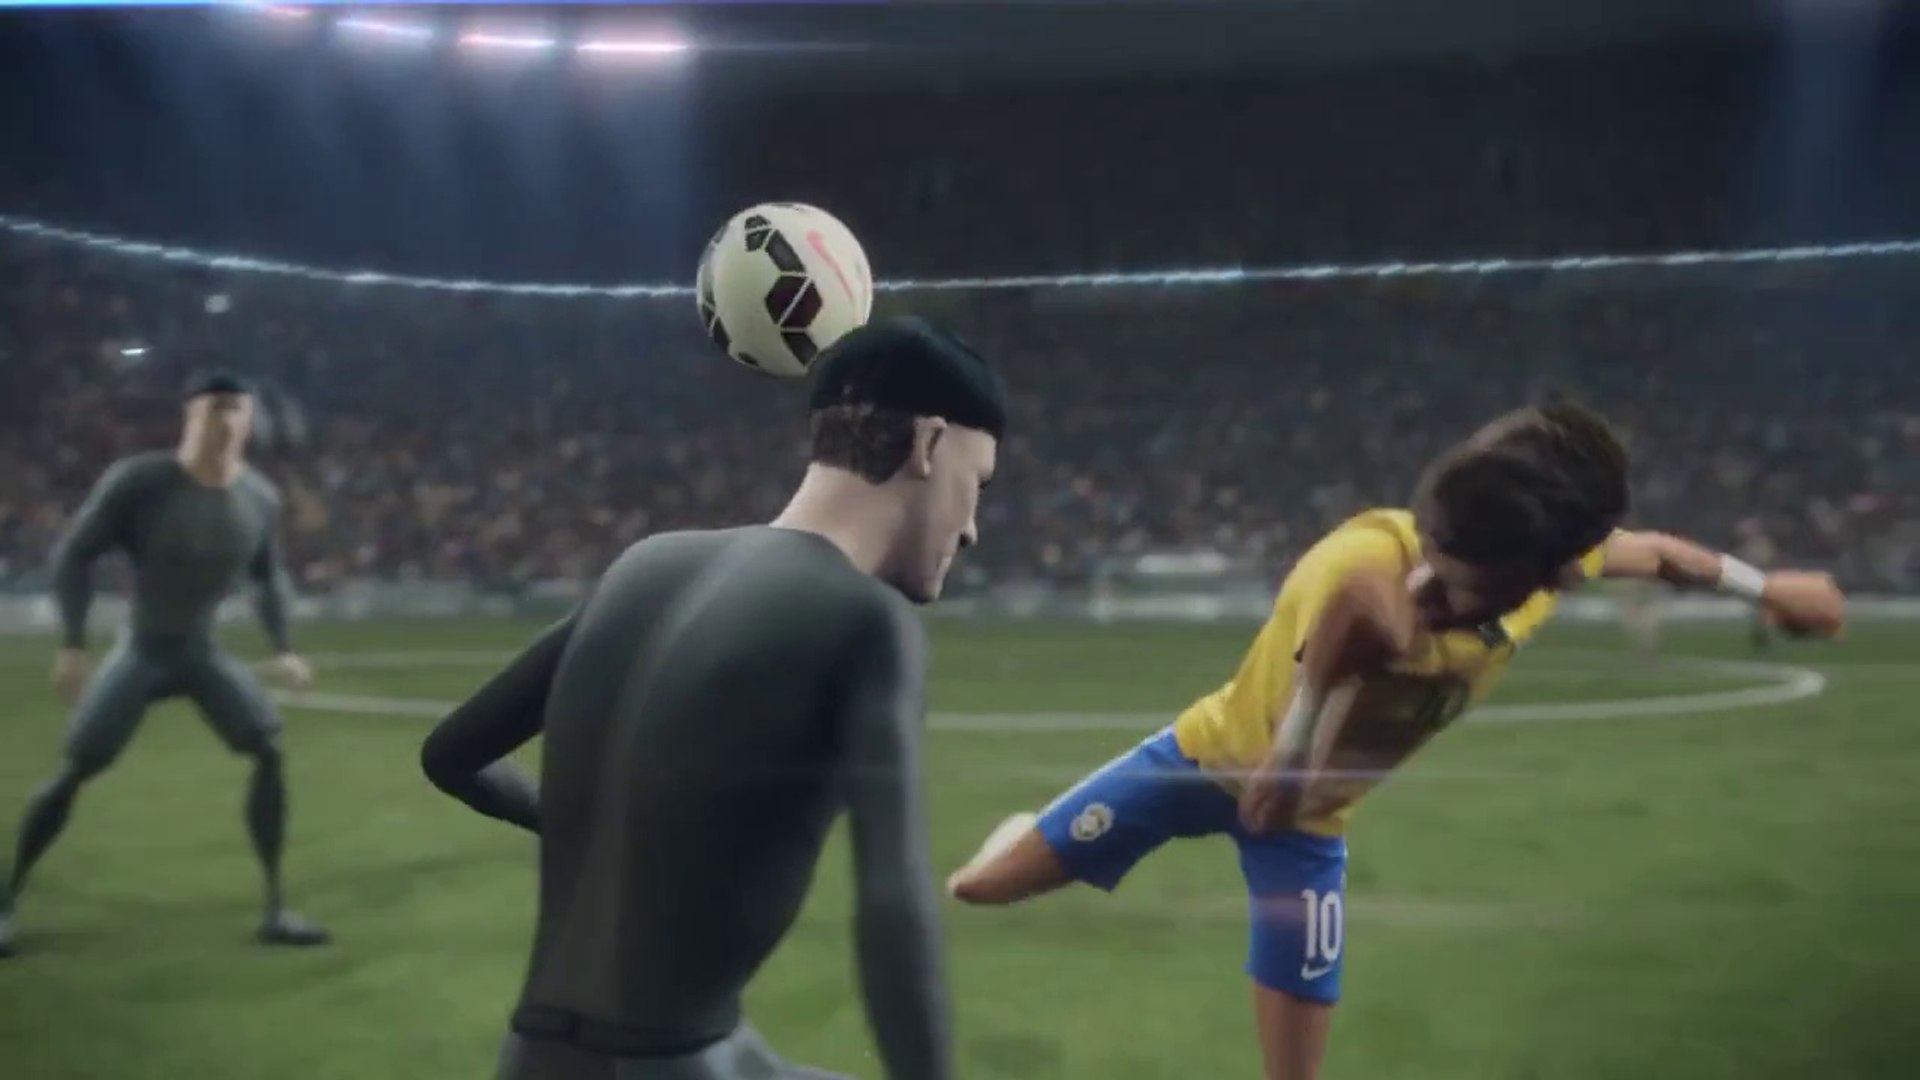 Pub Nike Football de dingue - Neymar face aux clone - En mode cartoon! -  Vidéo Dailymotion